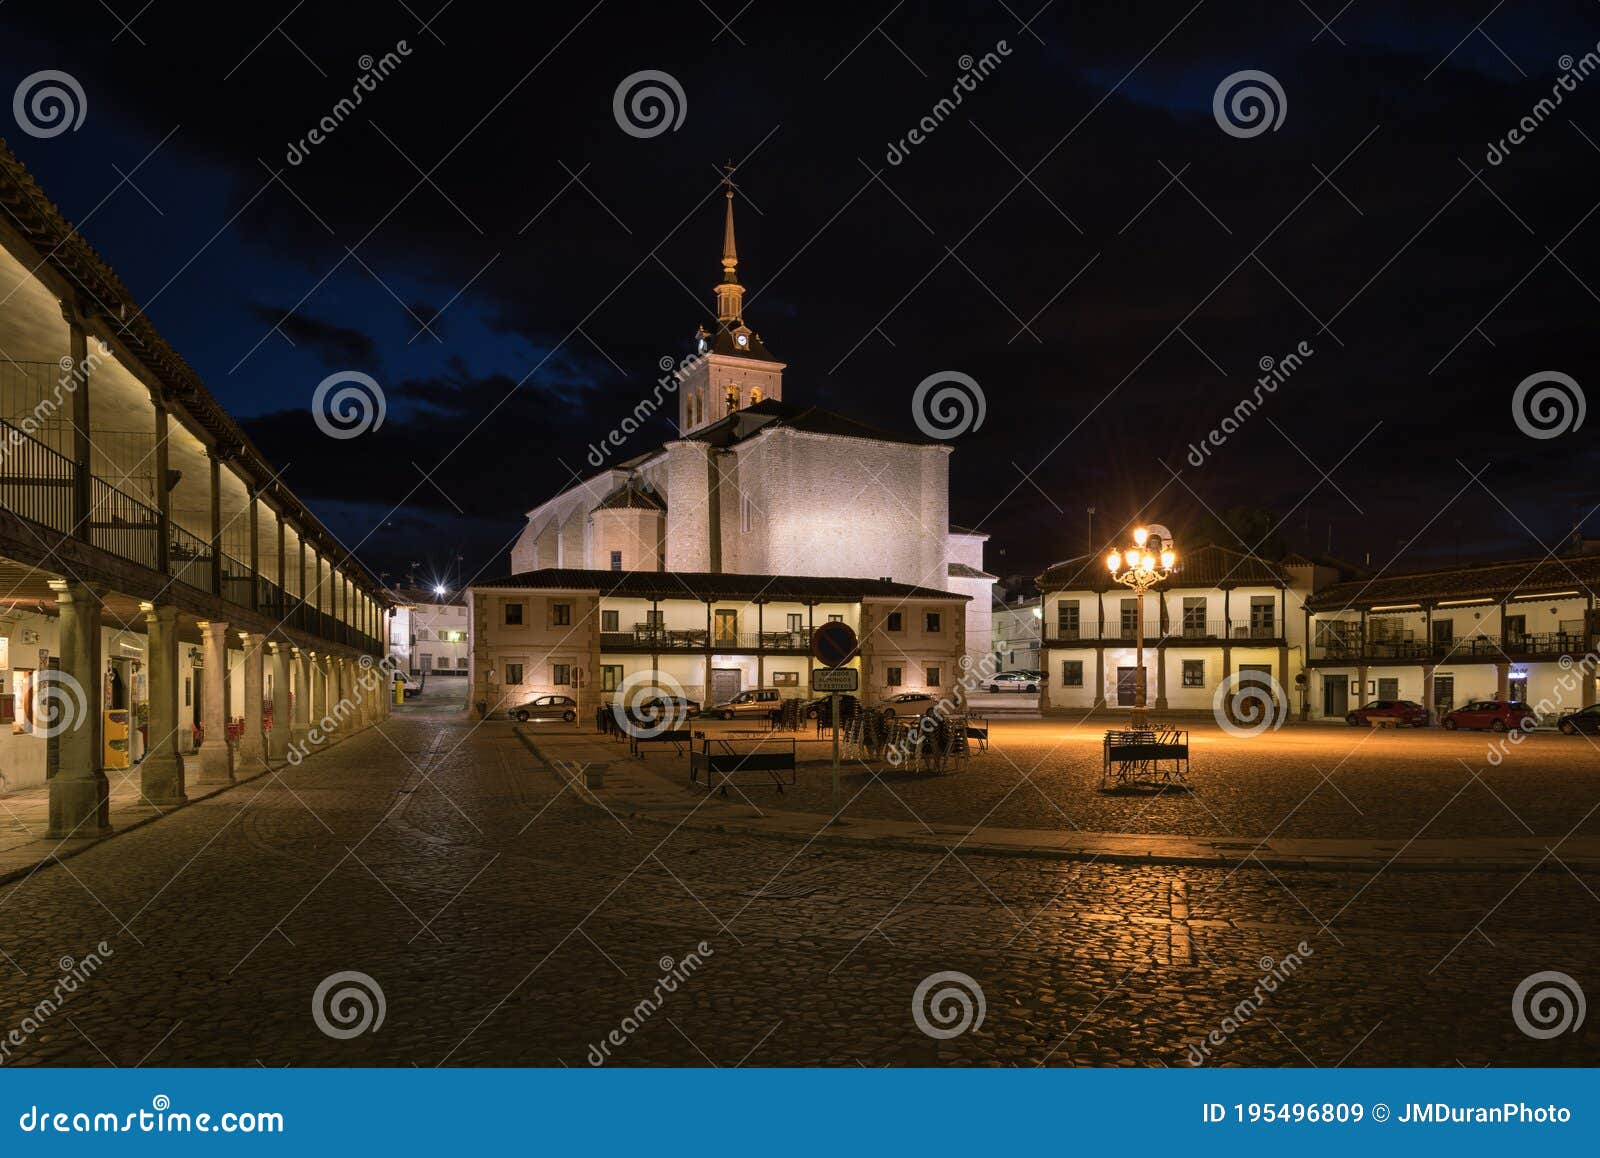 colmenar de oreja city landscape with the arcaded square illuminated at night, spain